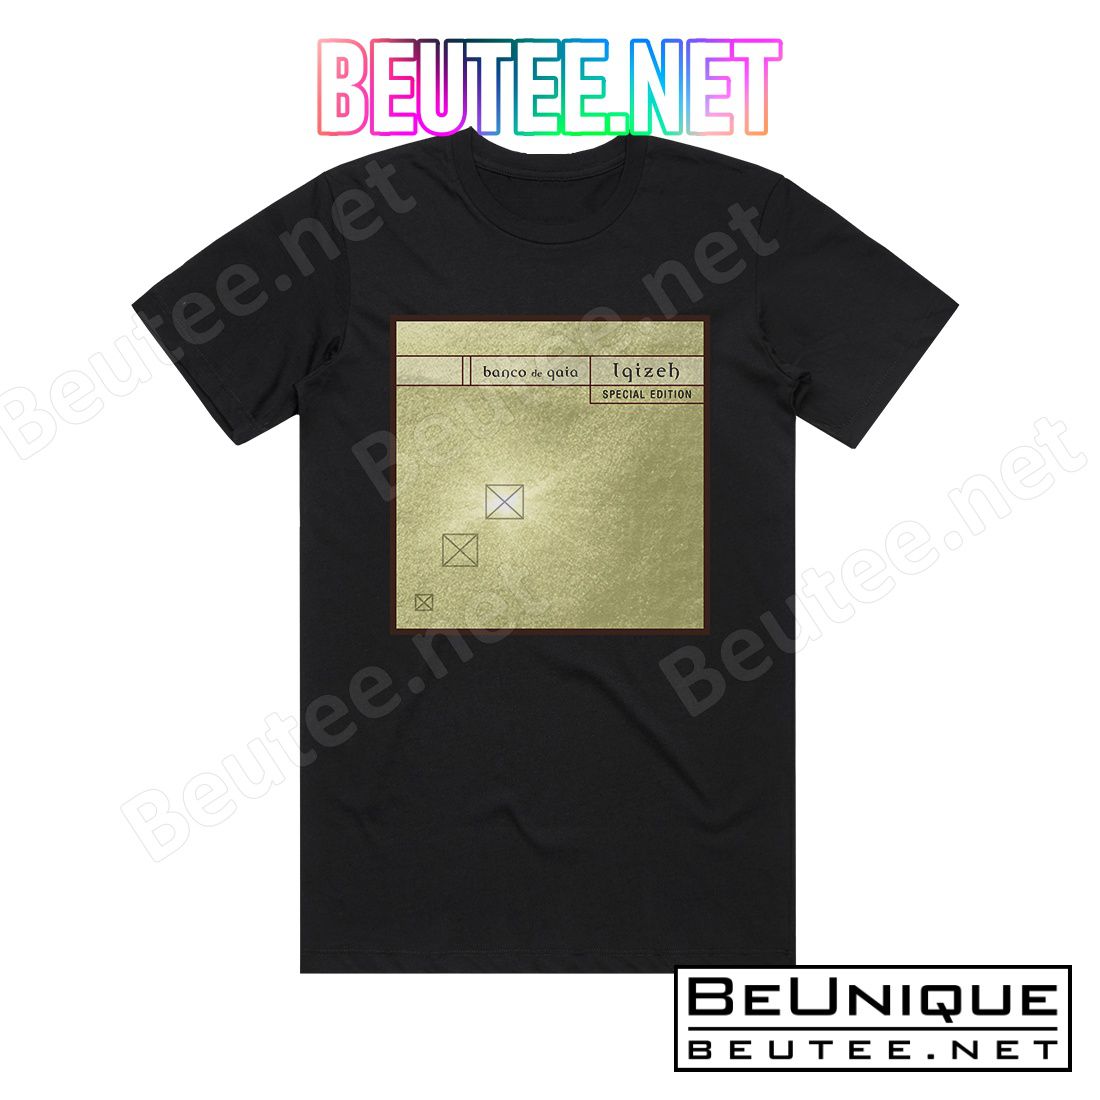 Banco de Gaia Igizeh Album Cover T-Shirt